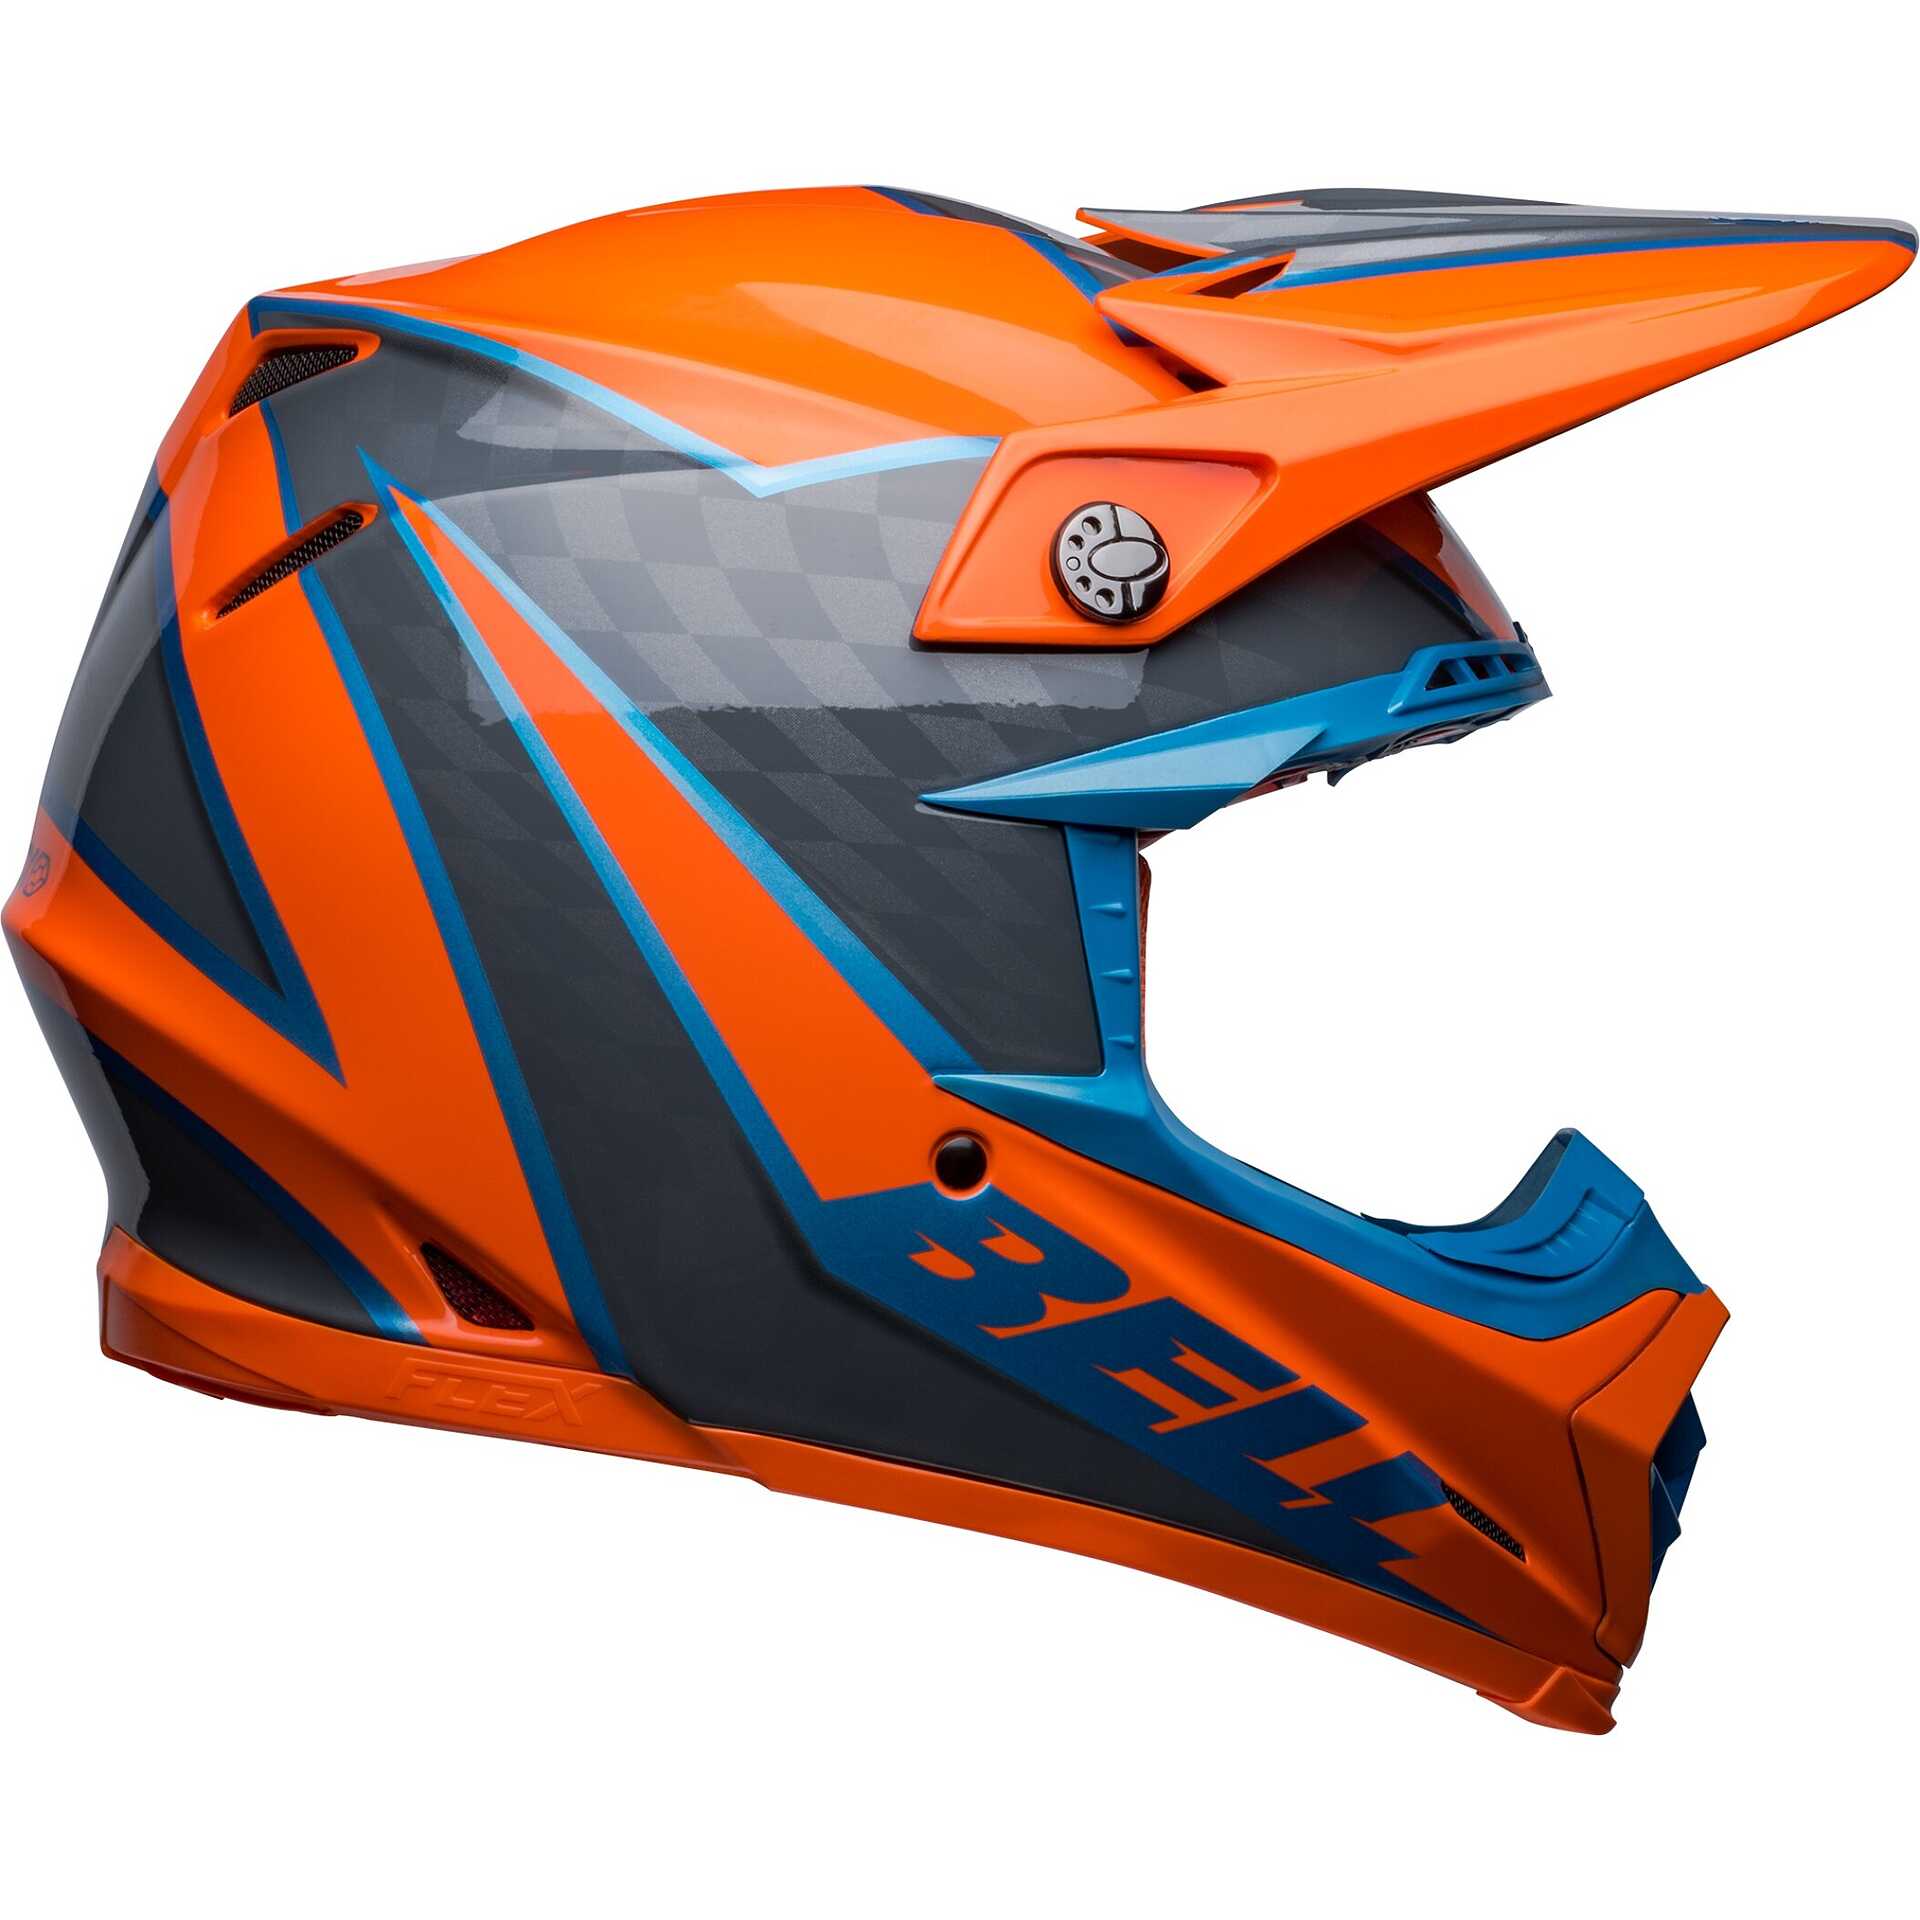 Couvre rayons Orange Fluo Moto/Cross/Pit Bike - Vente accessoires